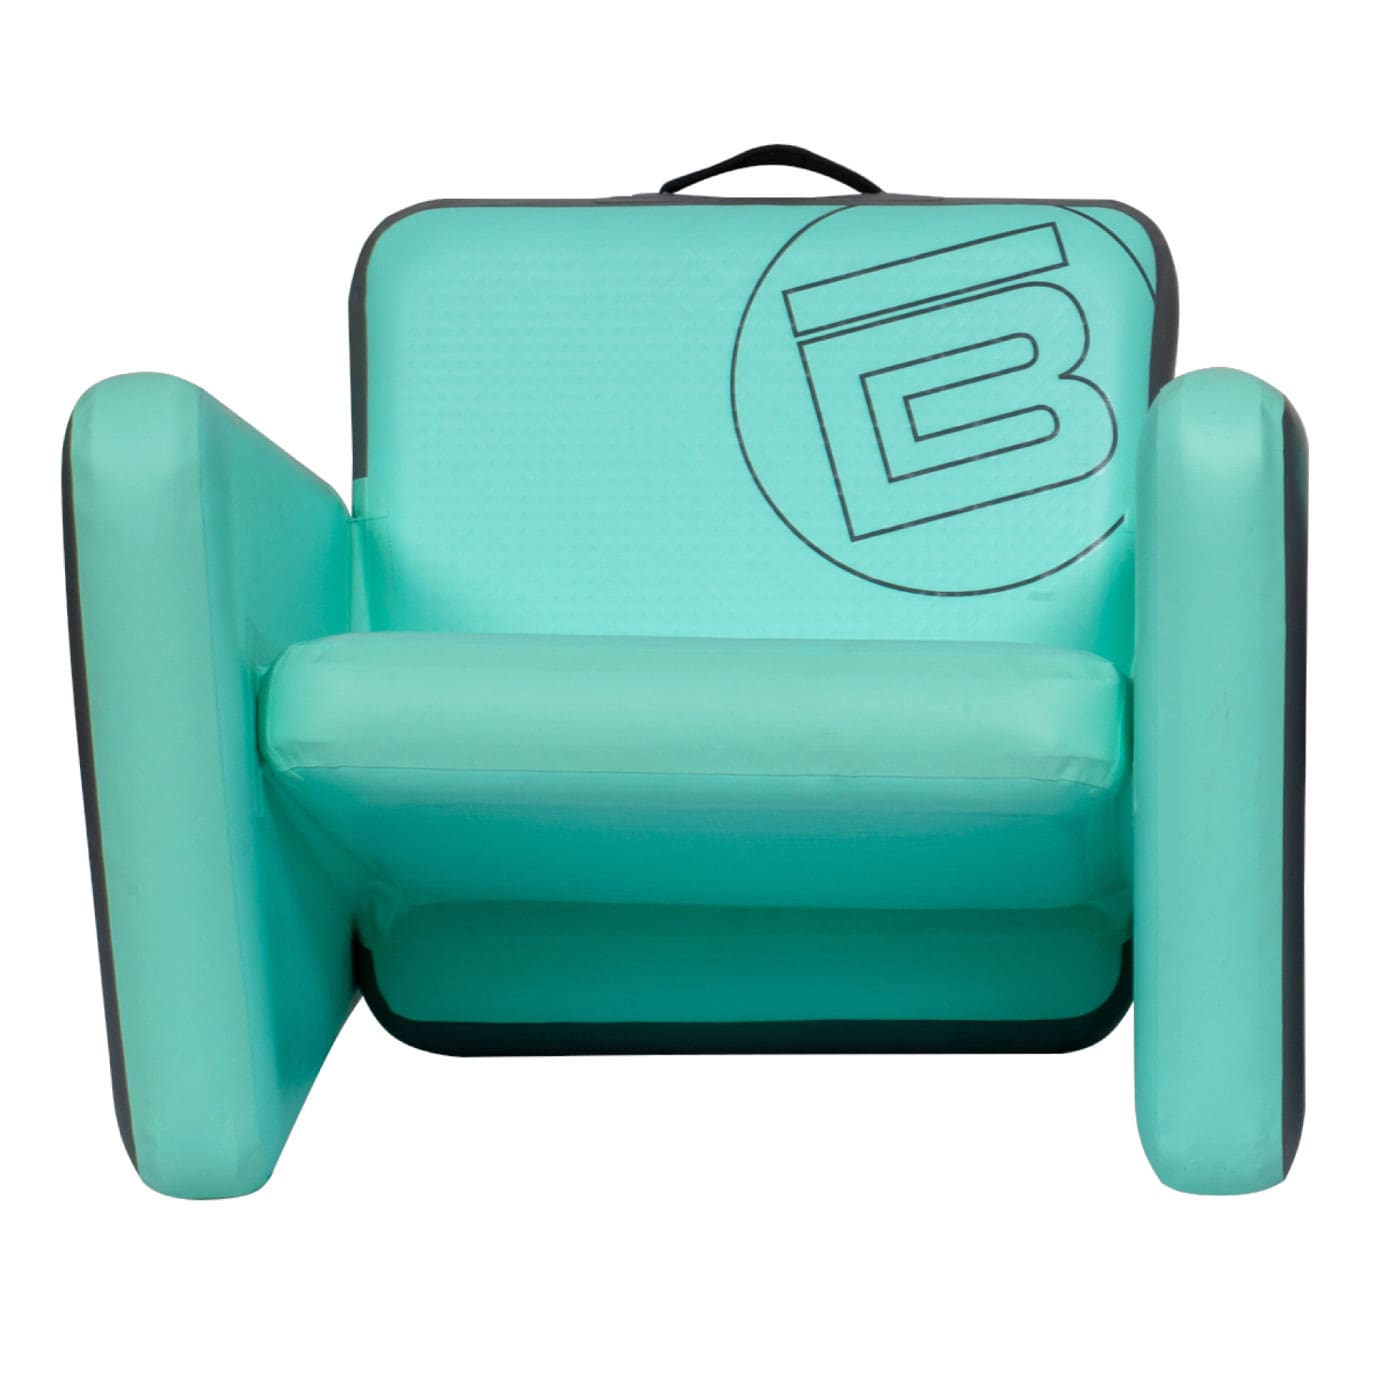 BOTE Inflatable Aero Chair XL 